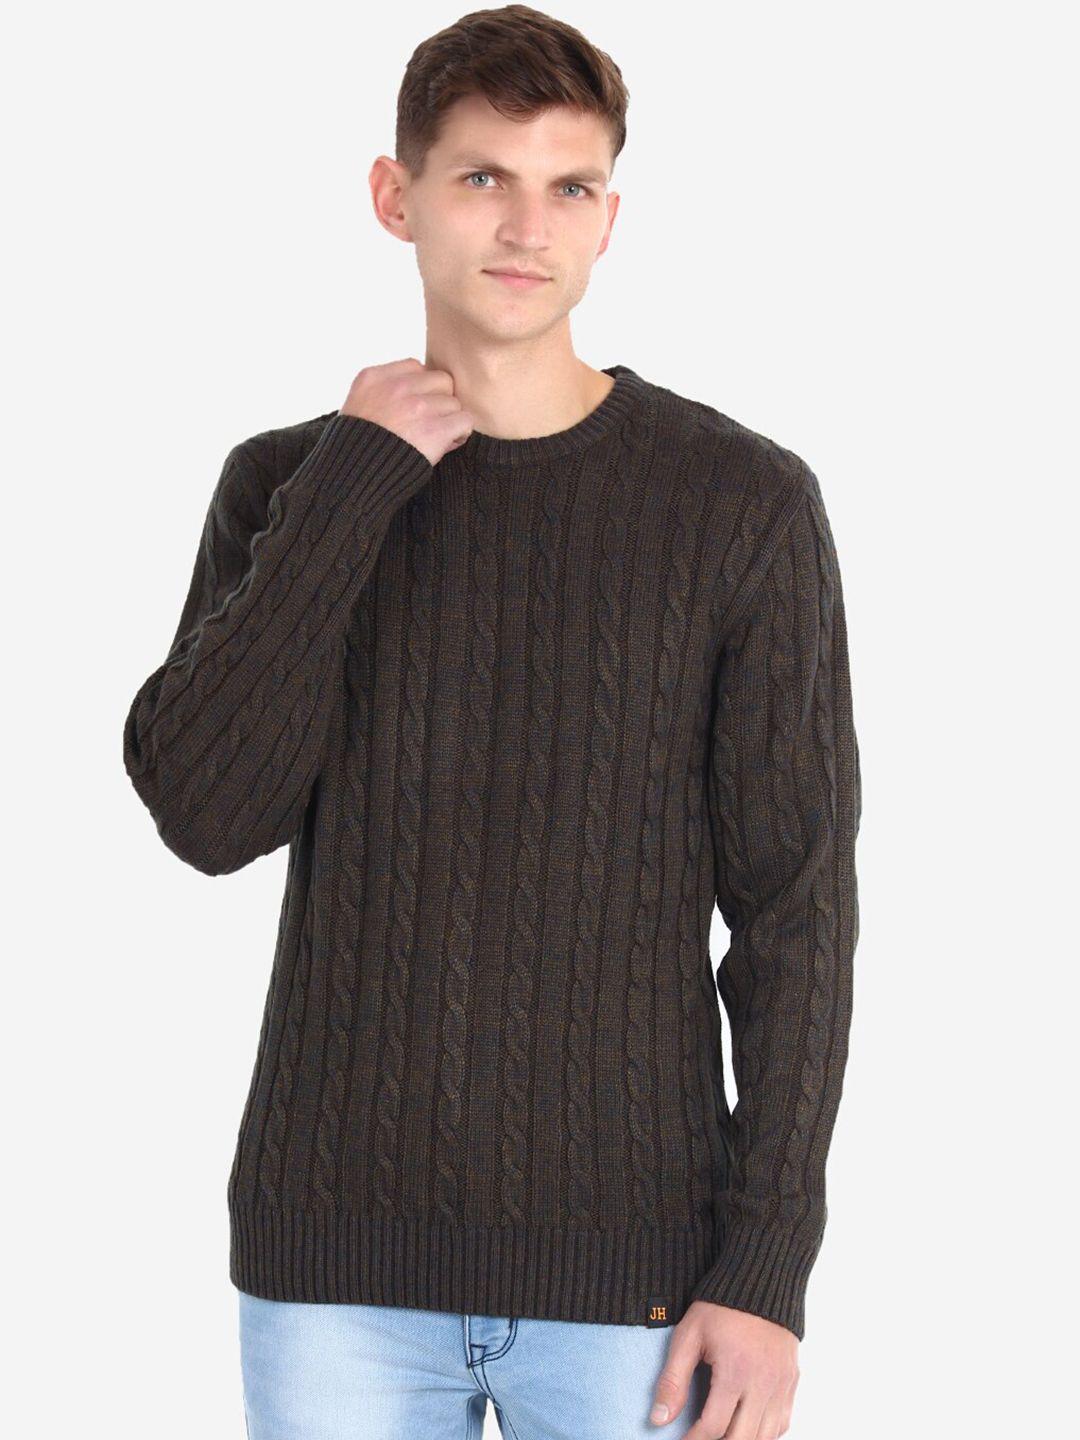 joe hazel men khaki acrylic cable knit pullover